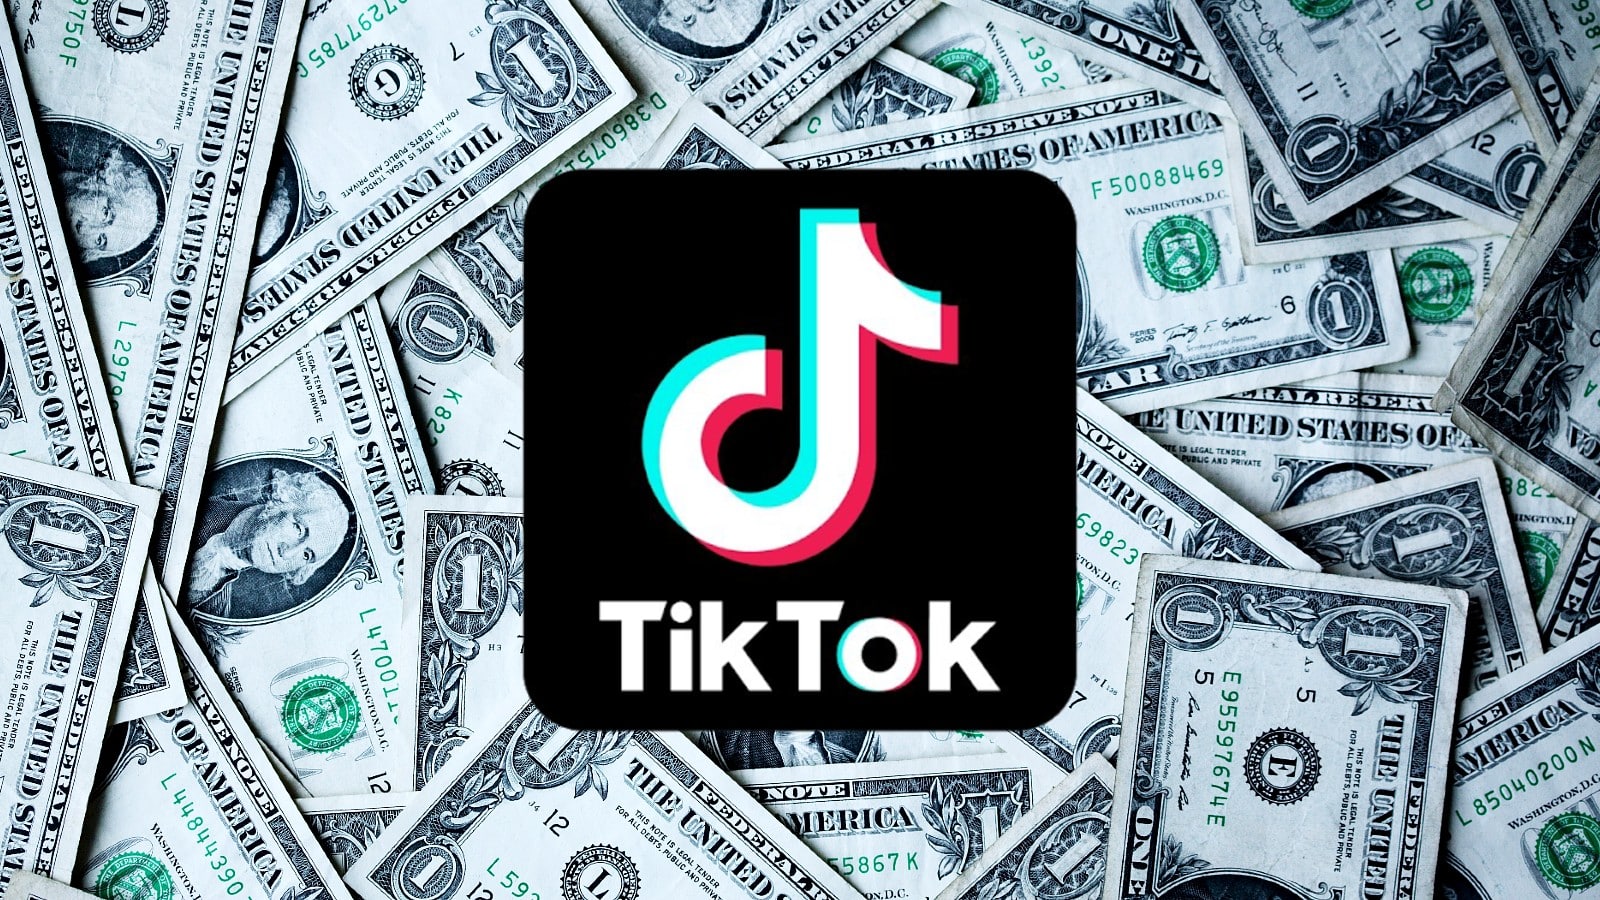 Money tiktok earn TikTok Money